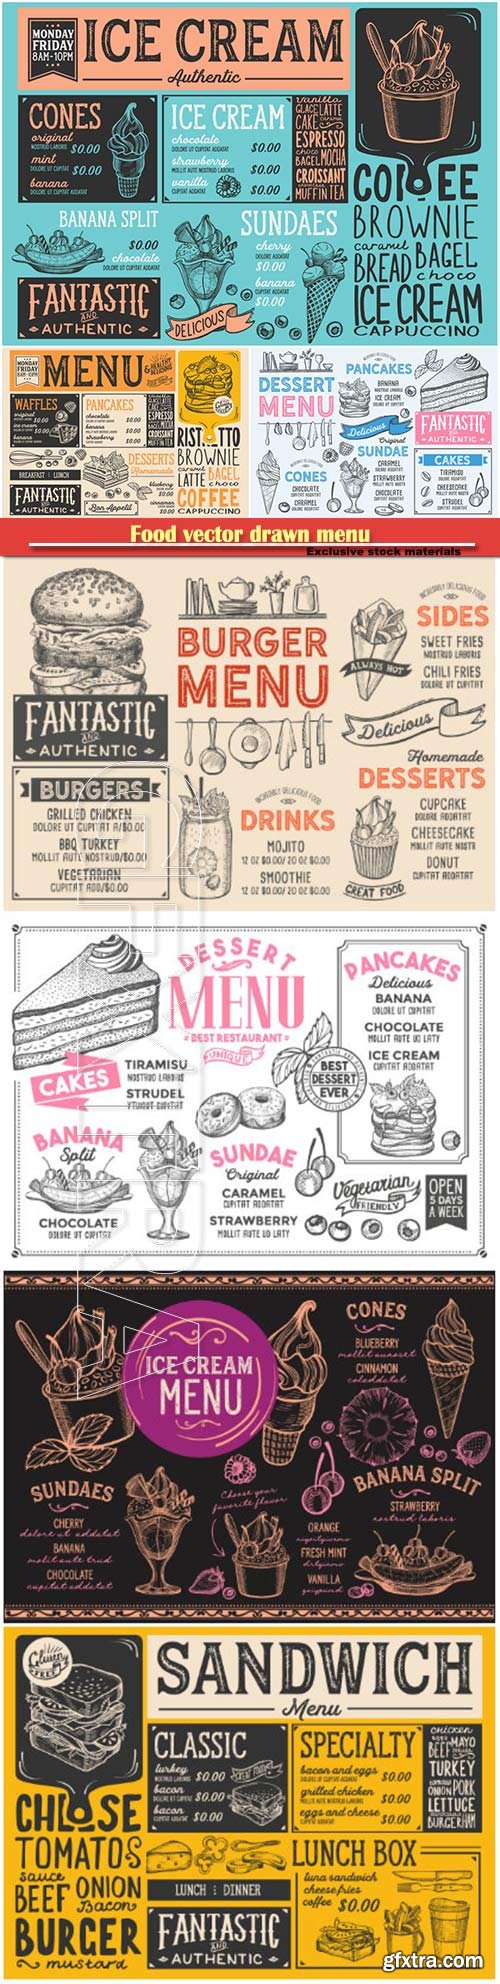 Food vector drawn menu, fast food, ice cream, cocktails, desserts